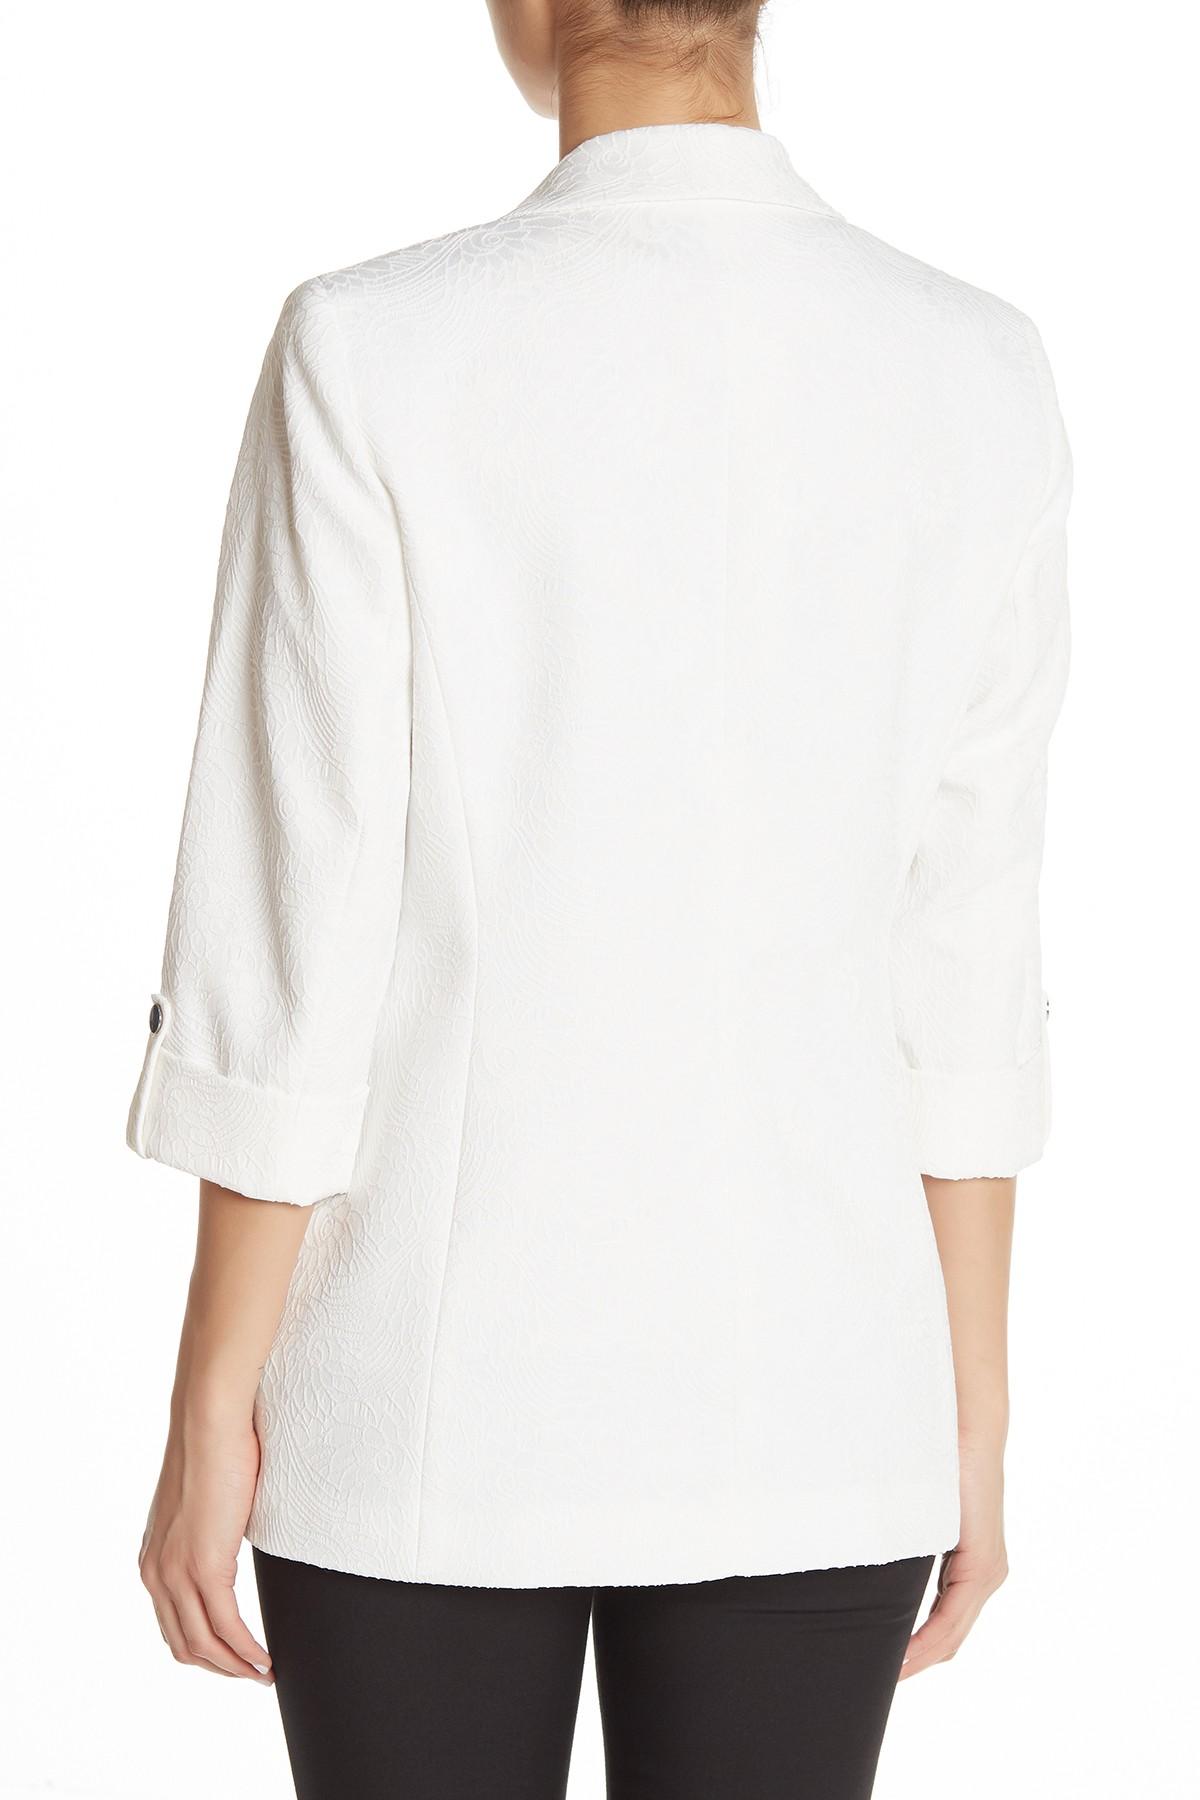 Kasper Synthetic Shawl Collar Roll Tab Jacquard Jacket in White - Lyst